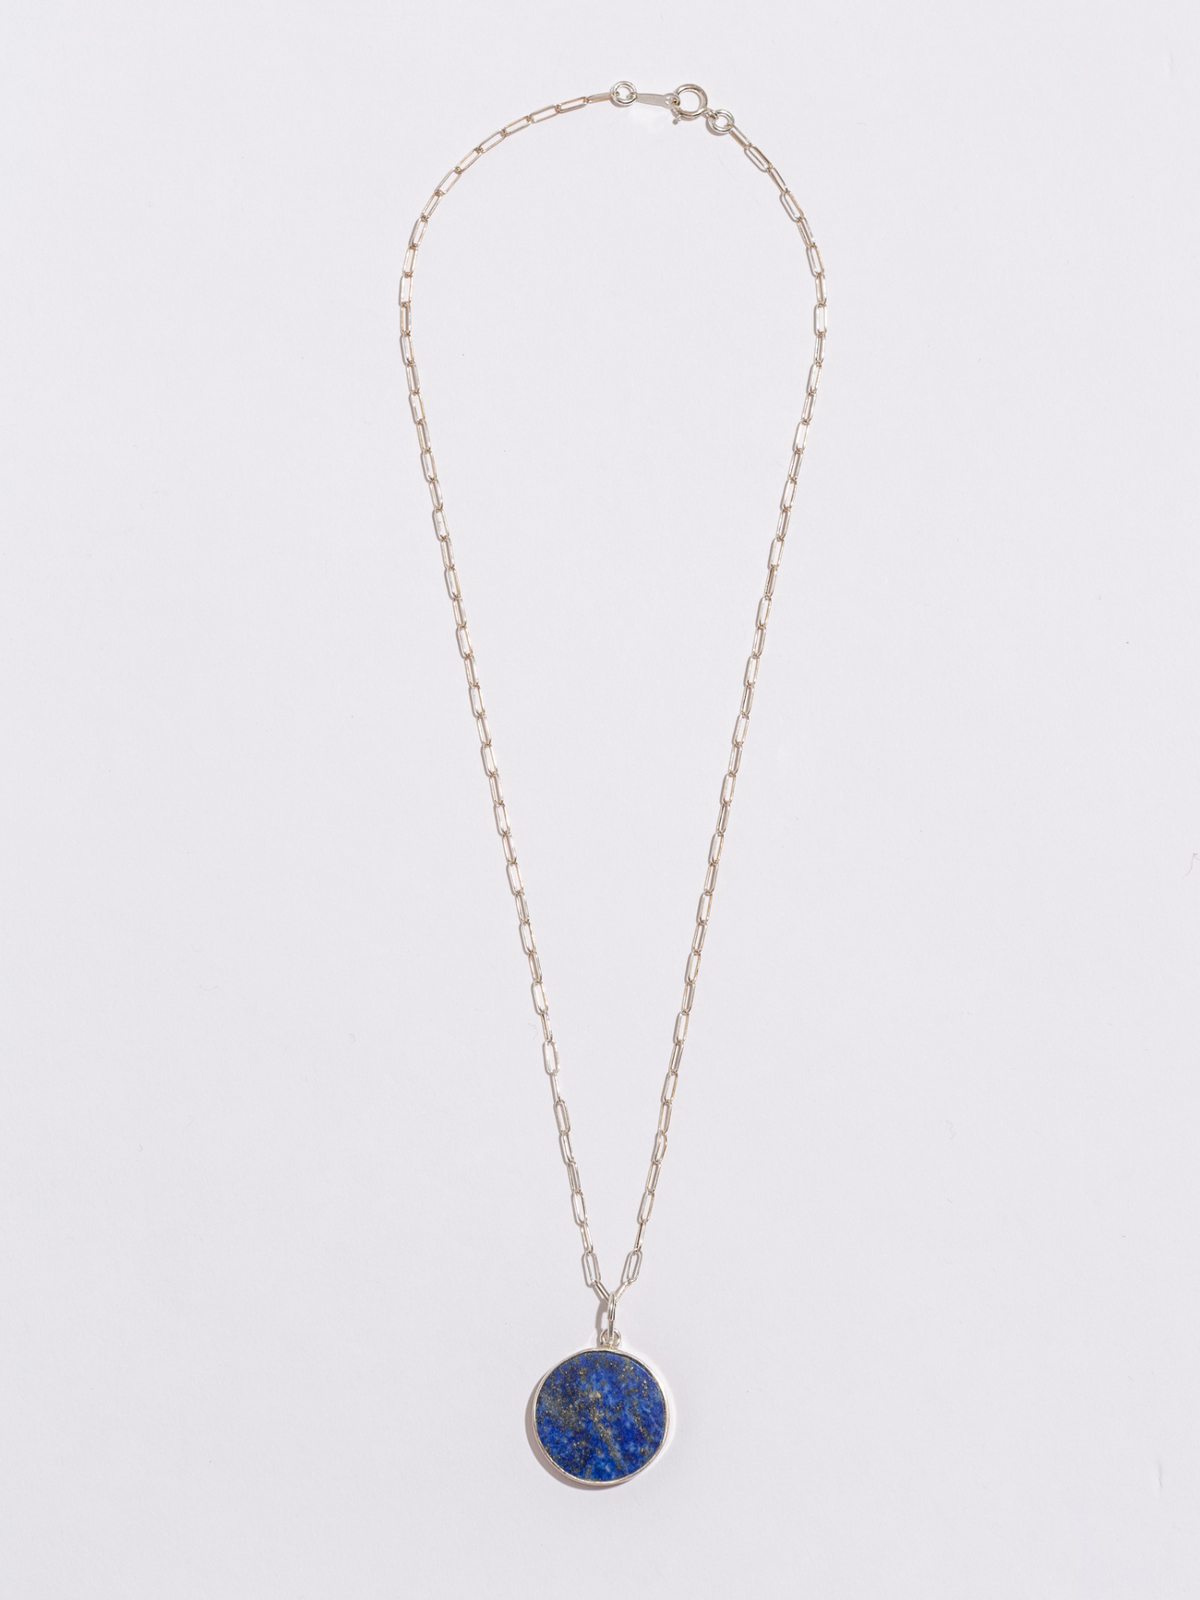 Jessica Lapis Coin Pendant Necklace